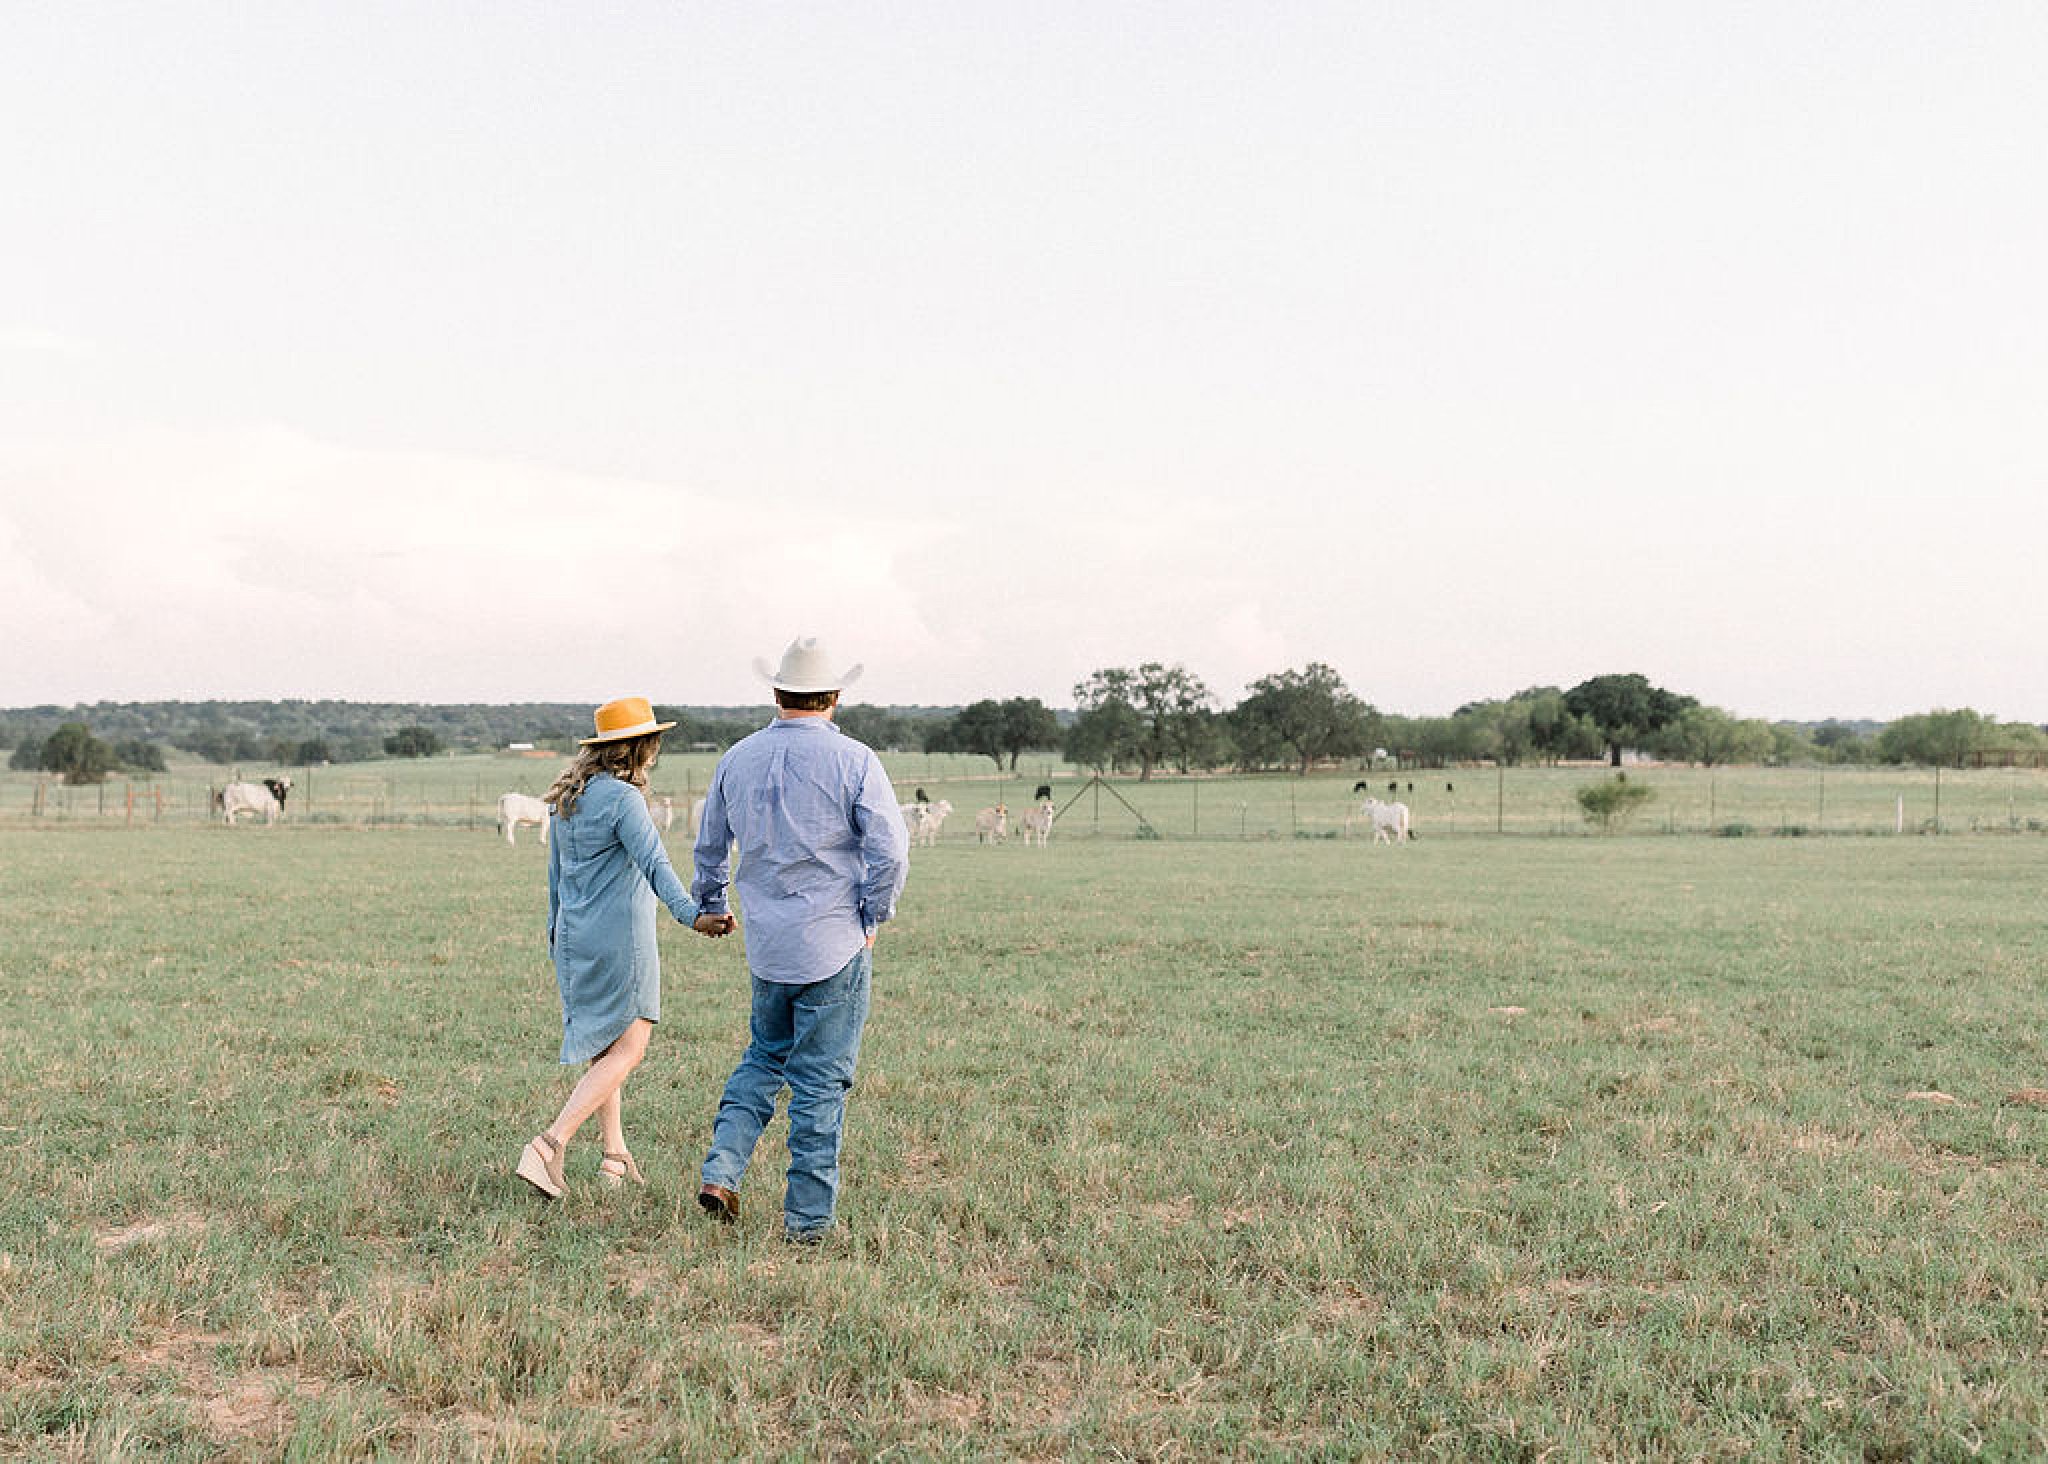 Texas Ranch Engagement Session, Anna Kay Photography, Texas Wedding Photographer